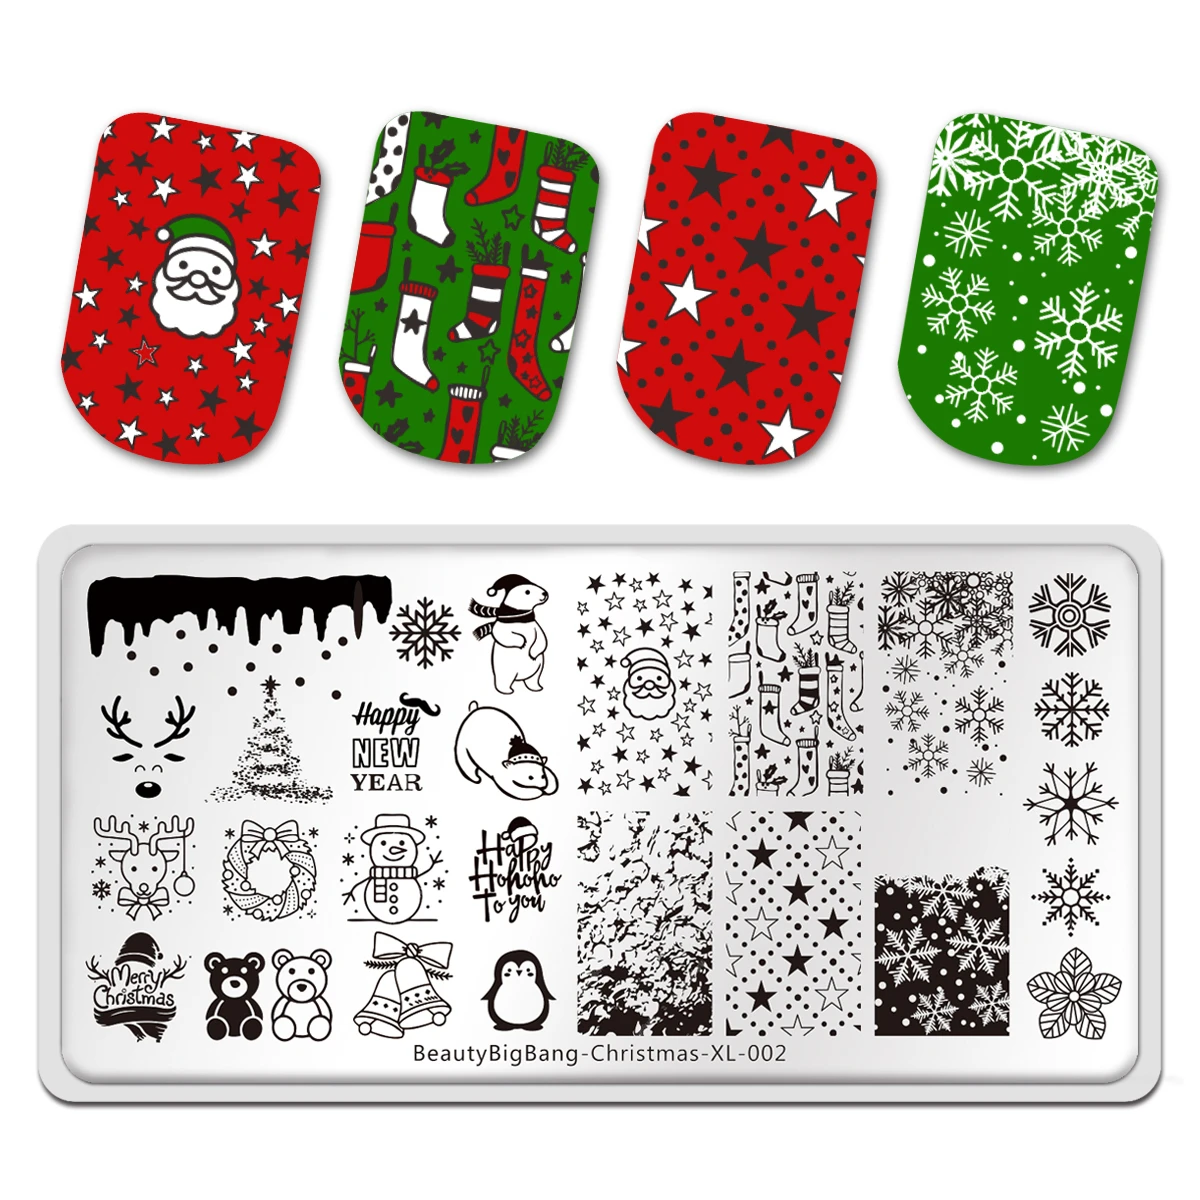 

BeautyBigBang Nail Stamping Plates New Christmas Snowflake Snowman Bear Deer Stars Image 6*12cm Nail Art Template Stencil